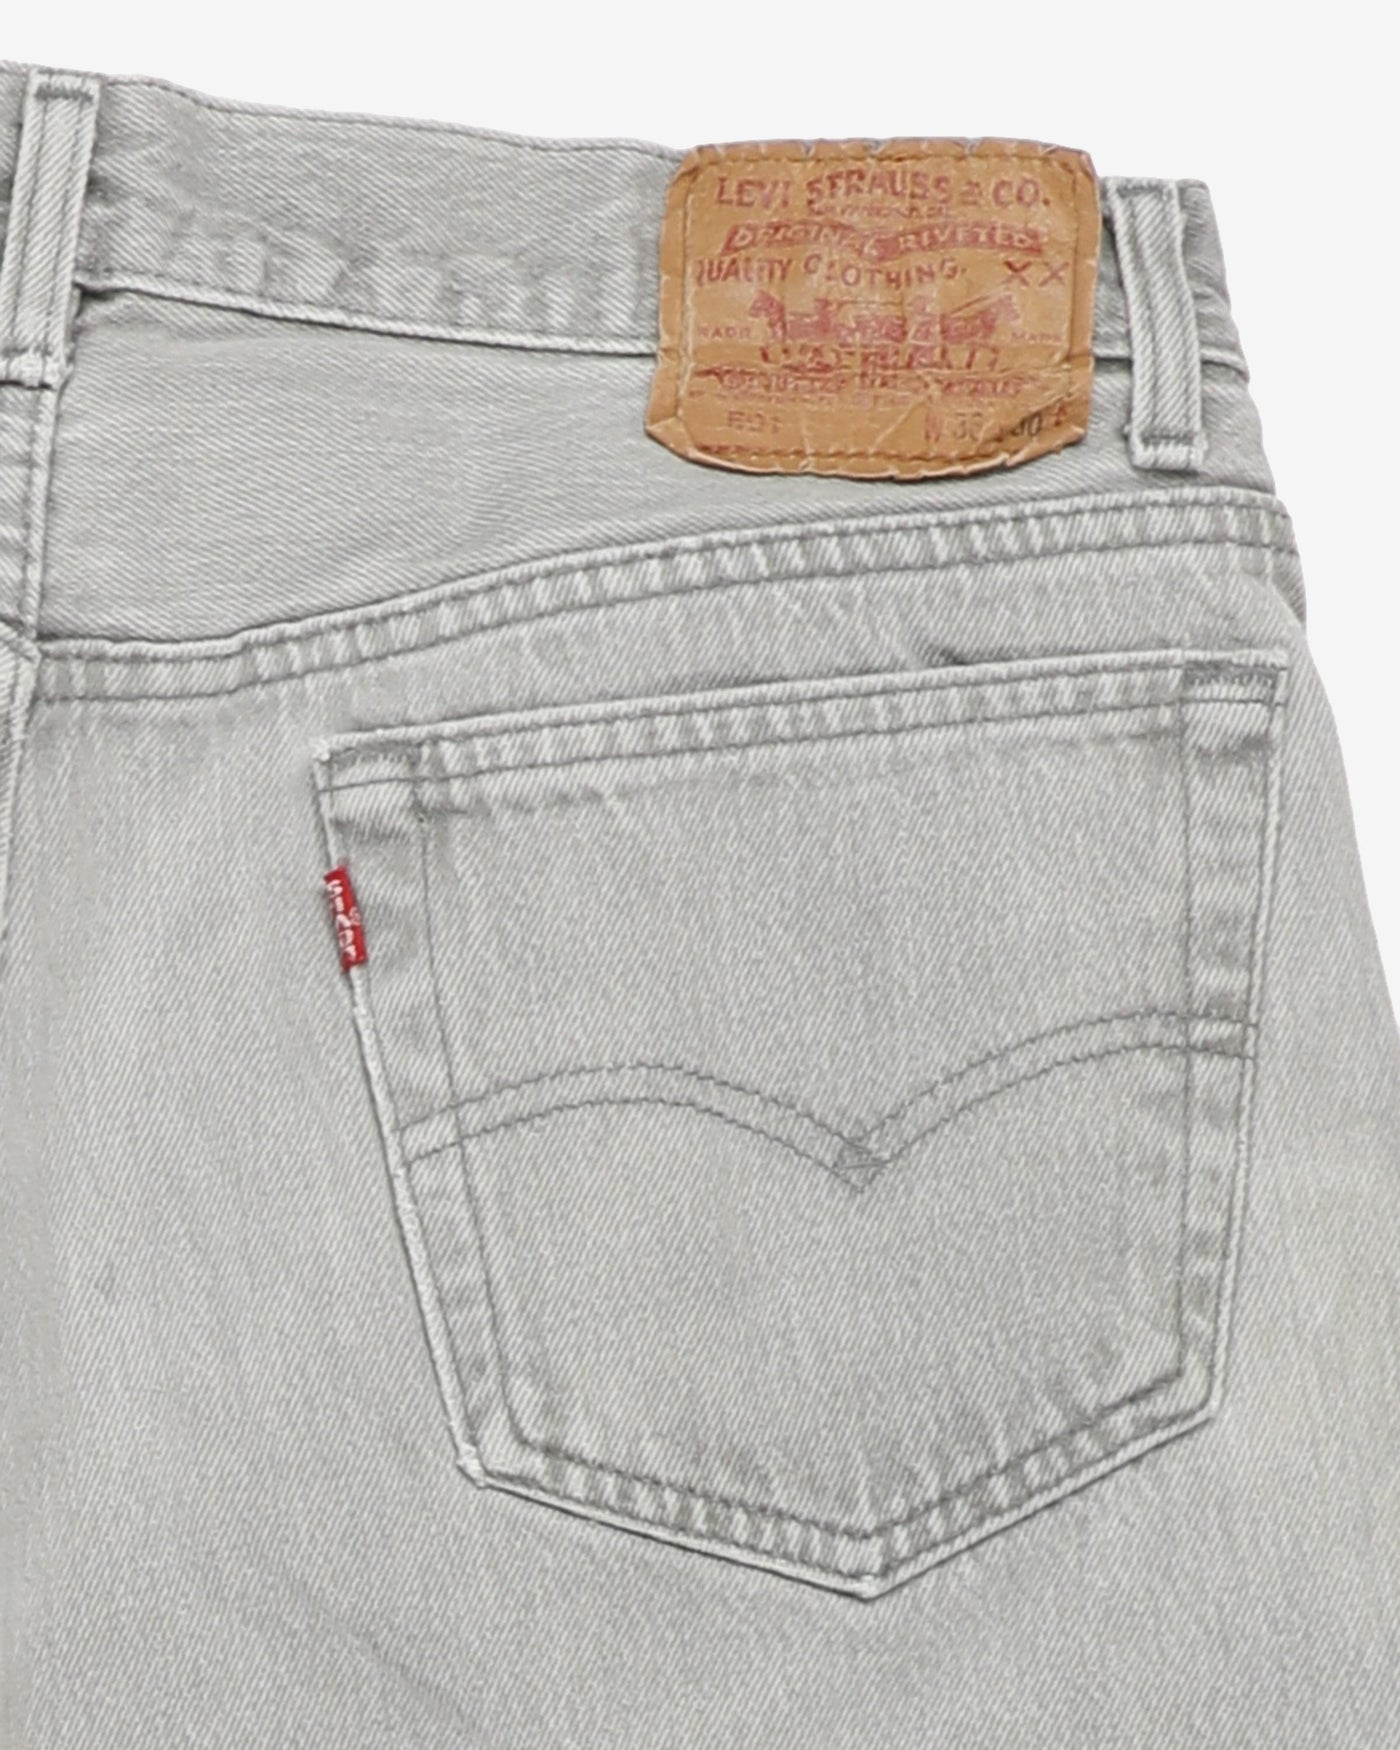 Vintage Levi's Jeans 501 Grey Denim - W34 L28